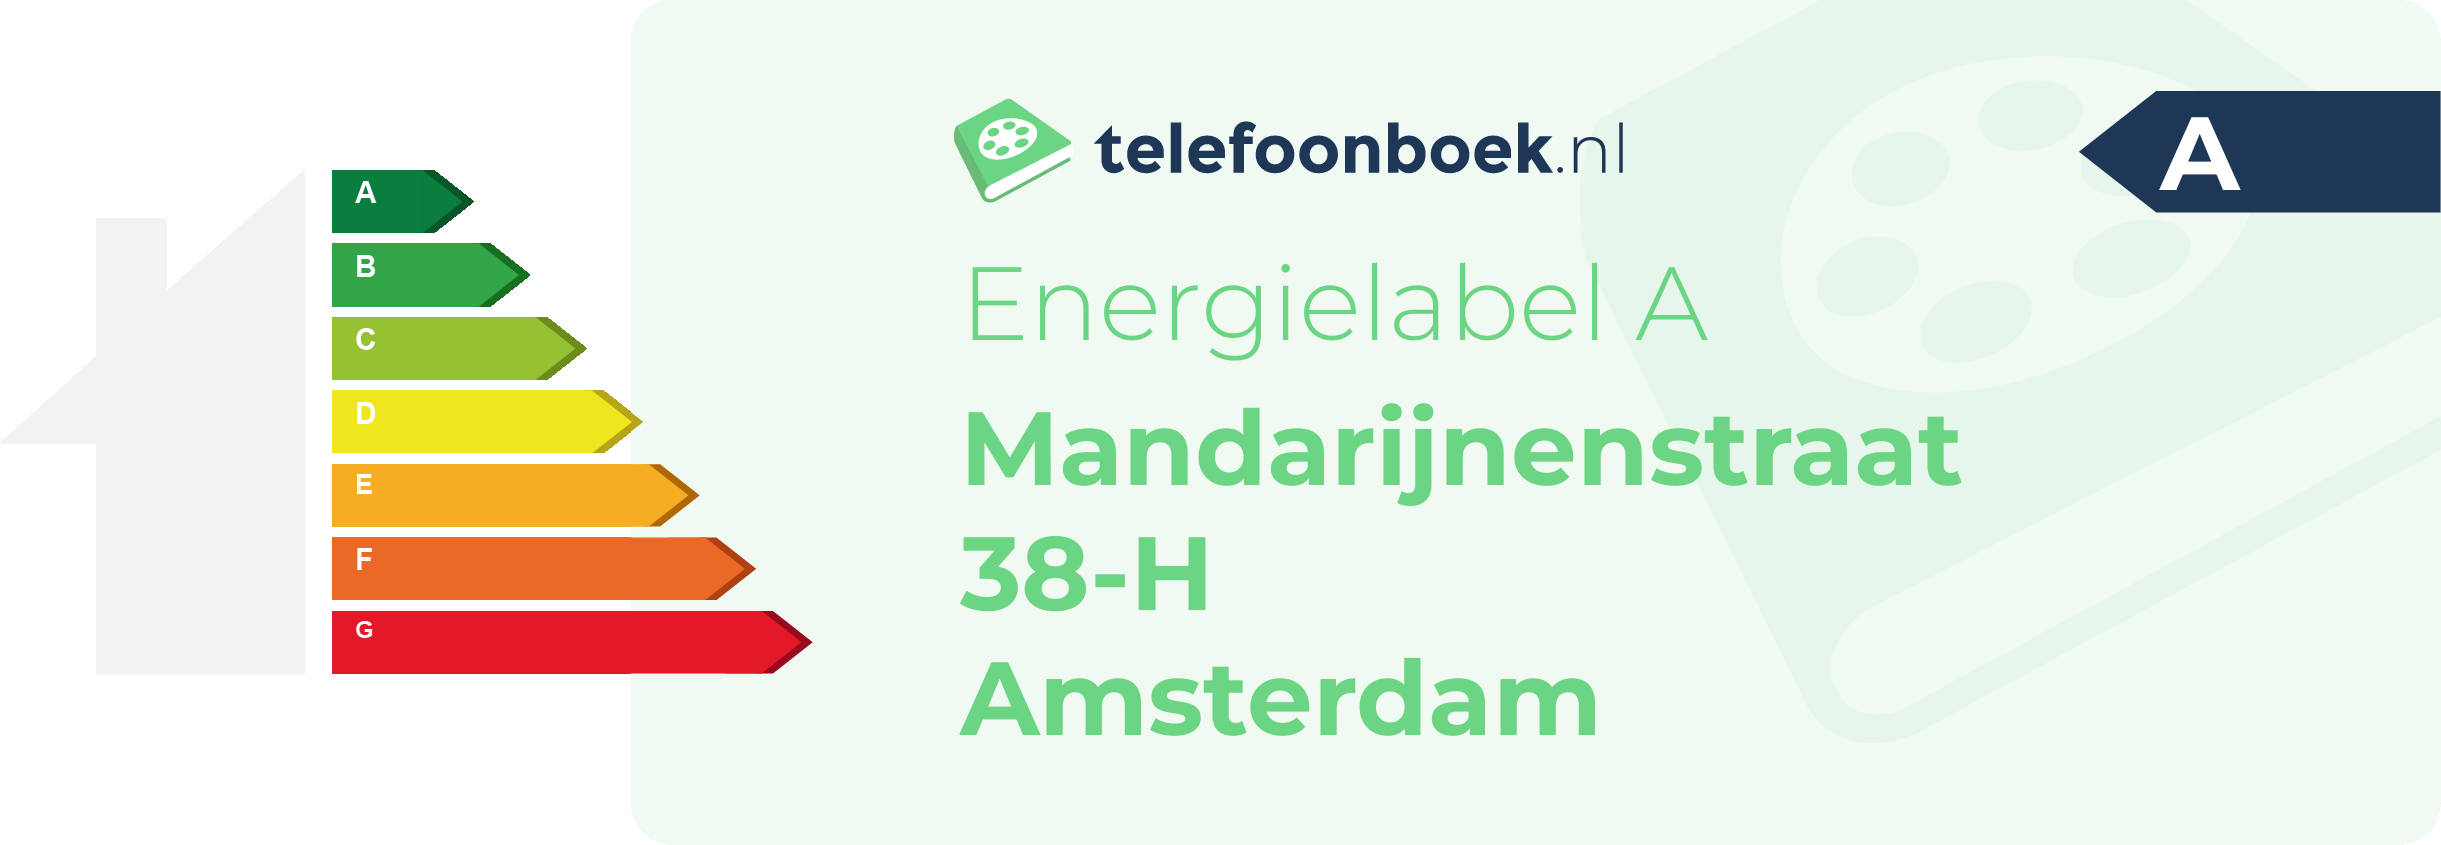 Energielabel Mandarijnenstraat 38-H Amsterdam